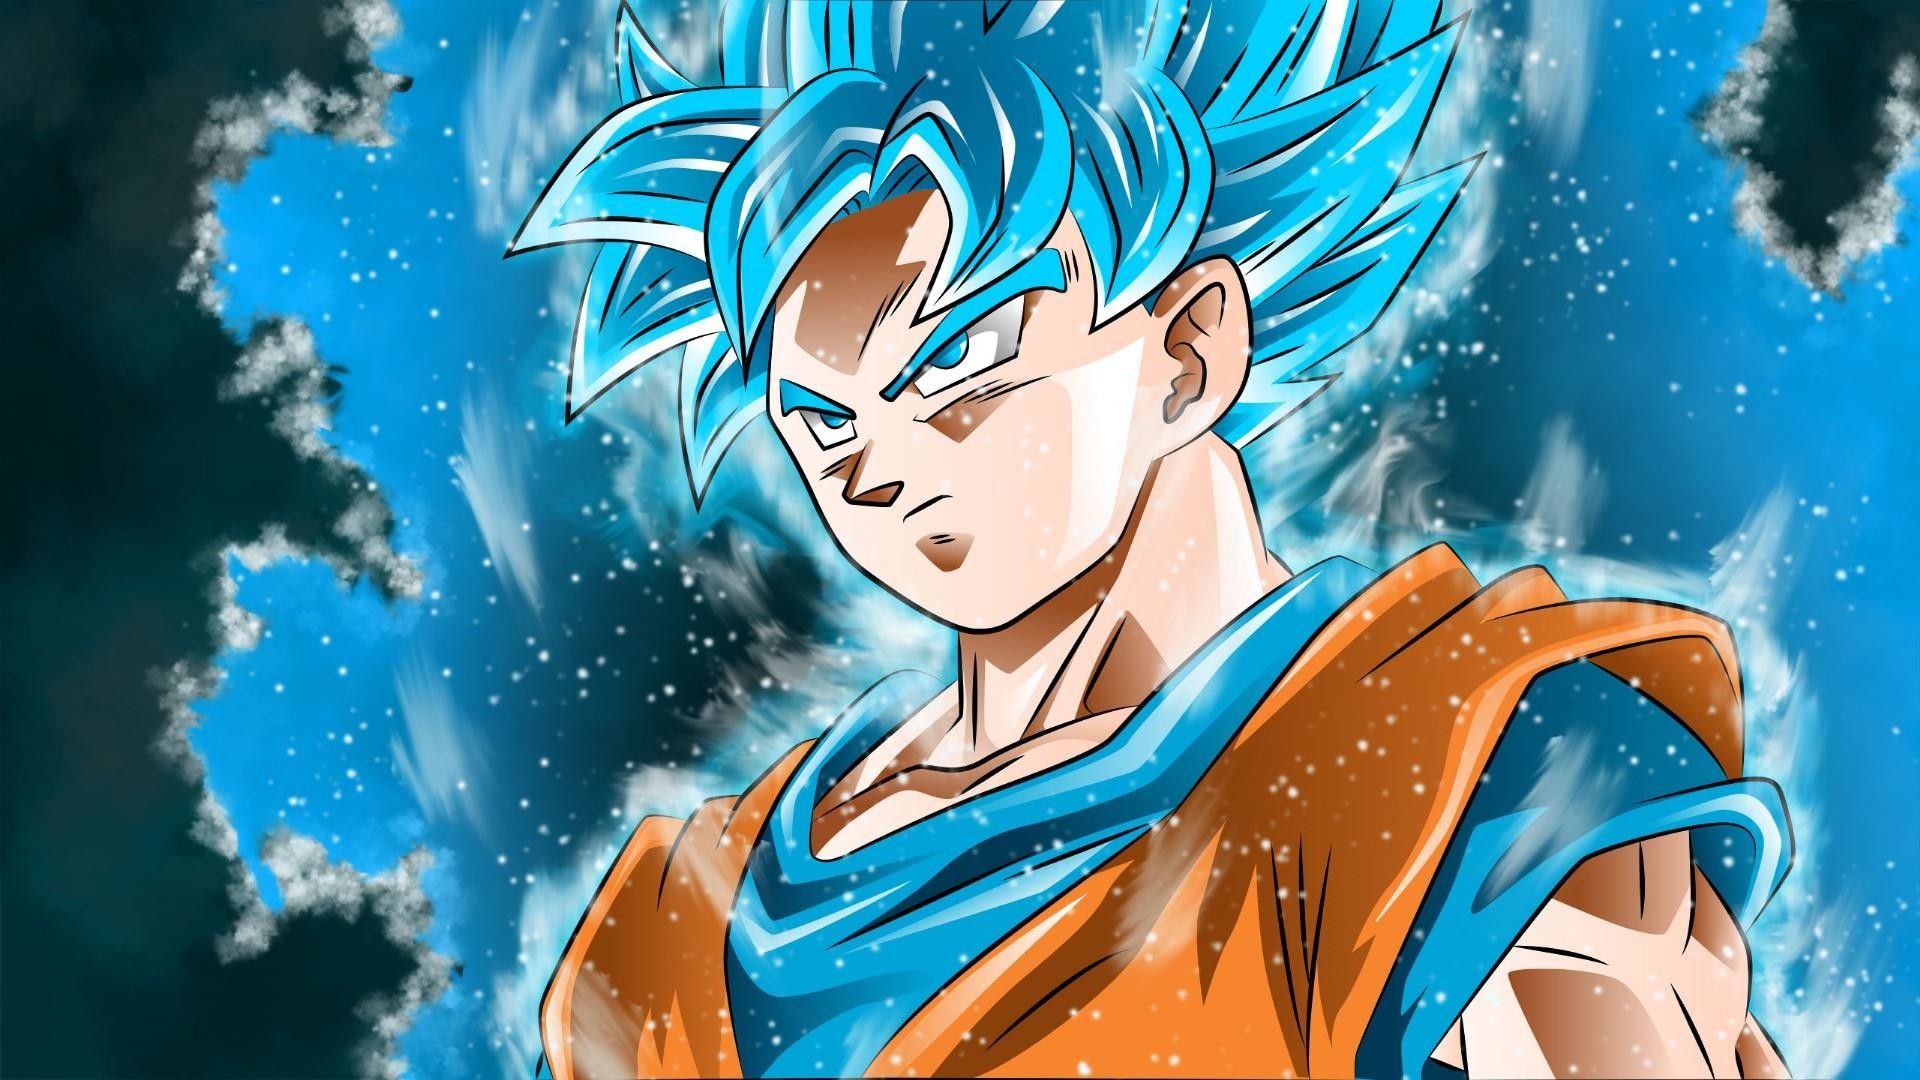 Wallpaper of Goku